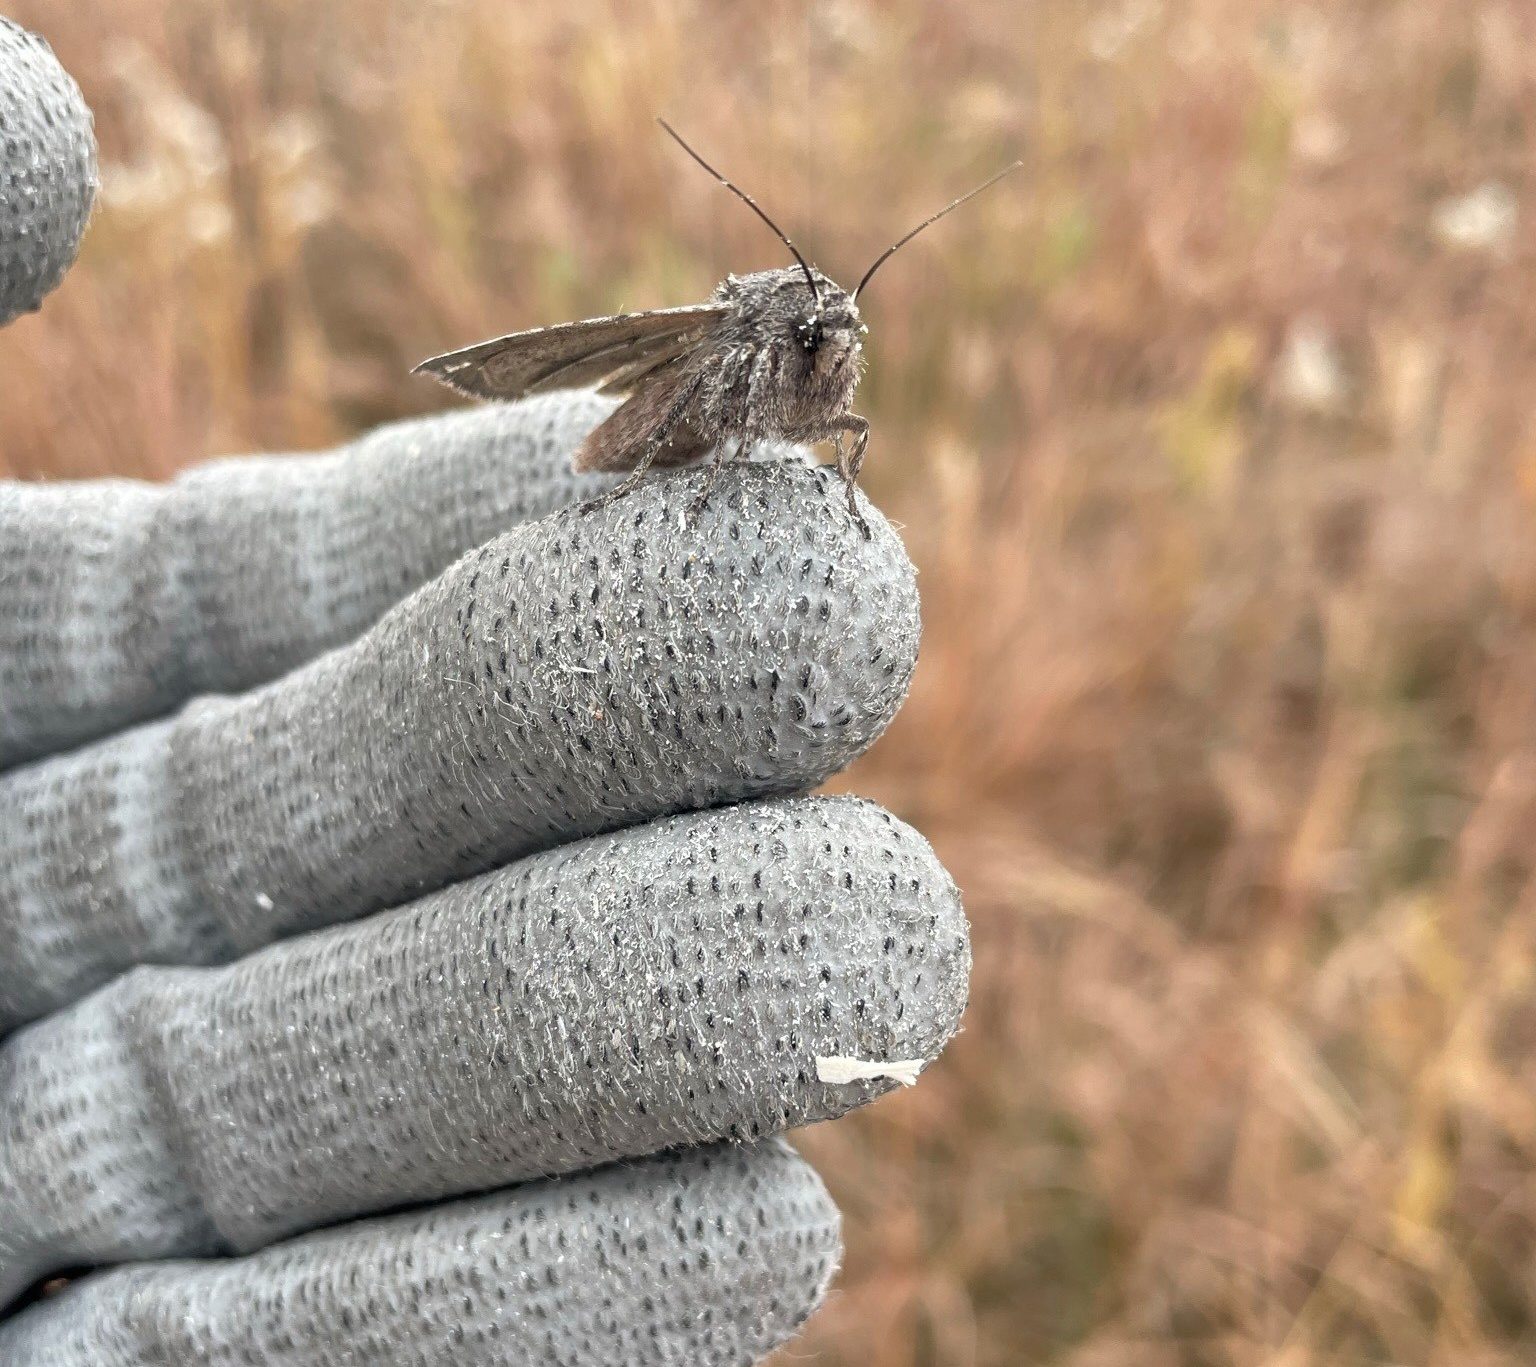 Moth on a glove.